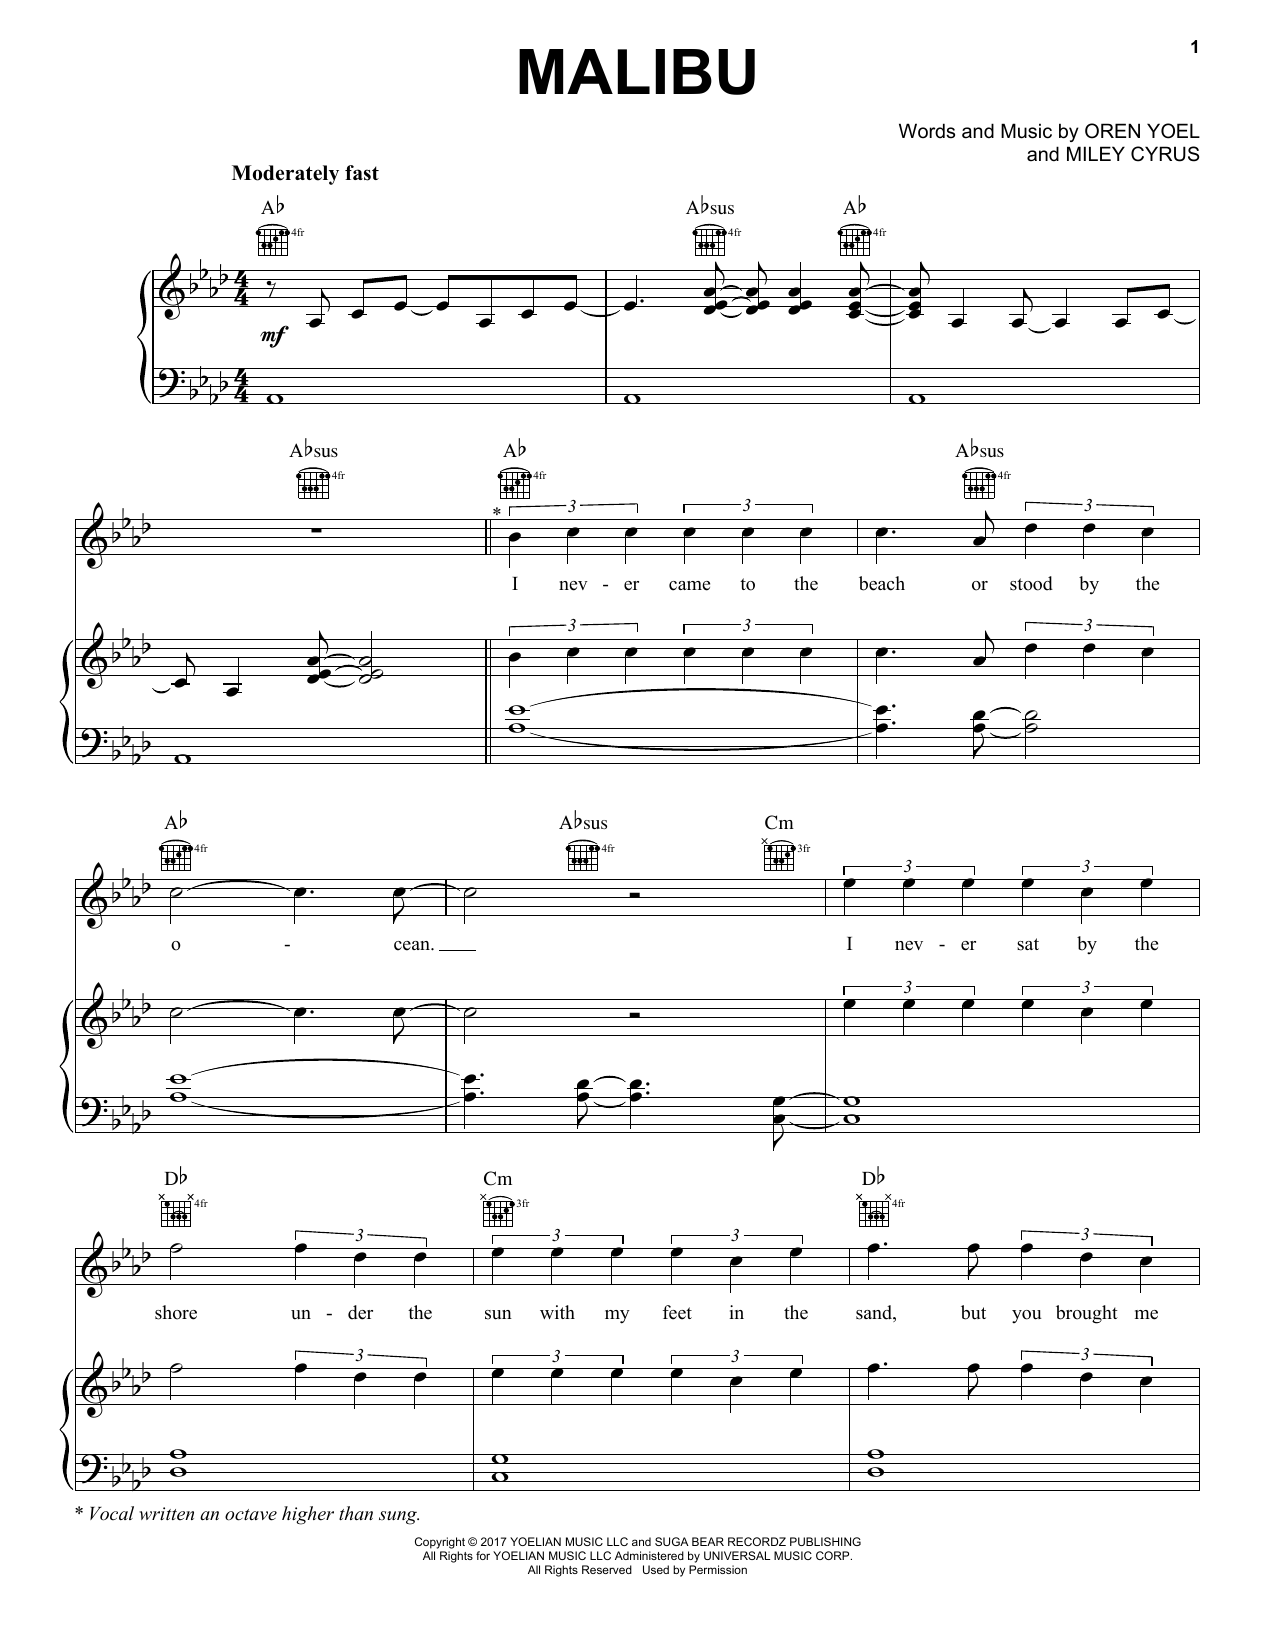 Miley Cyrus Malibu Sheet Music Notes & Chords for Keyboard - Download or Print PDF